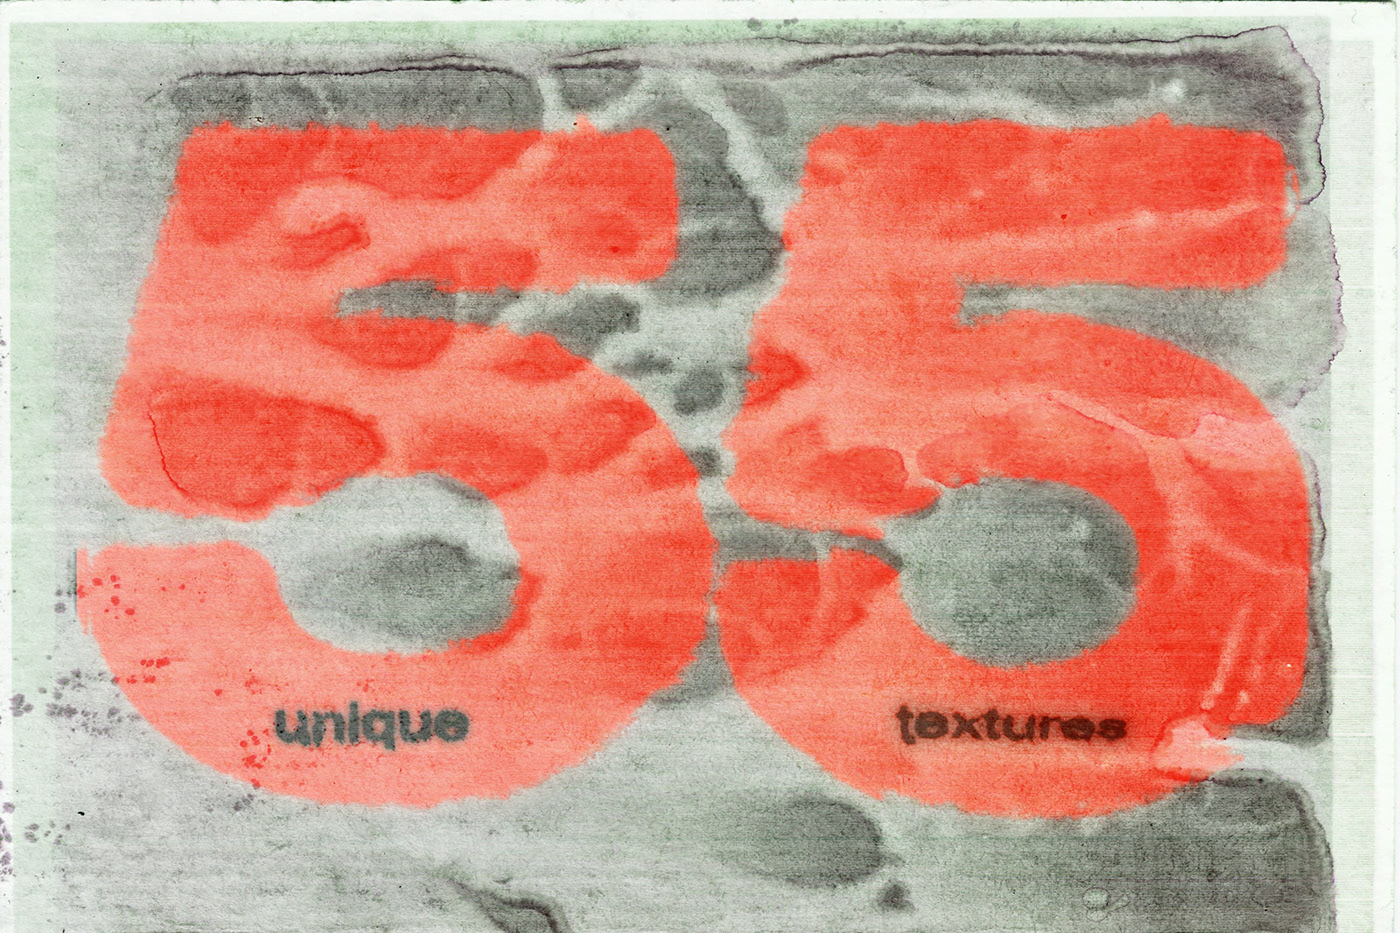 grunge texture textures vintage paper print Retro prints collage analog